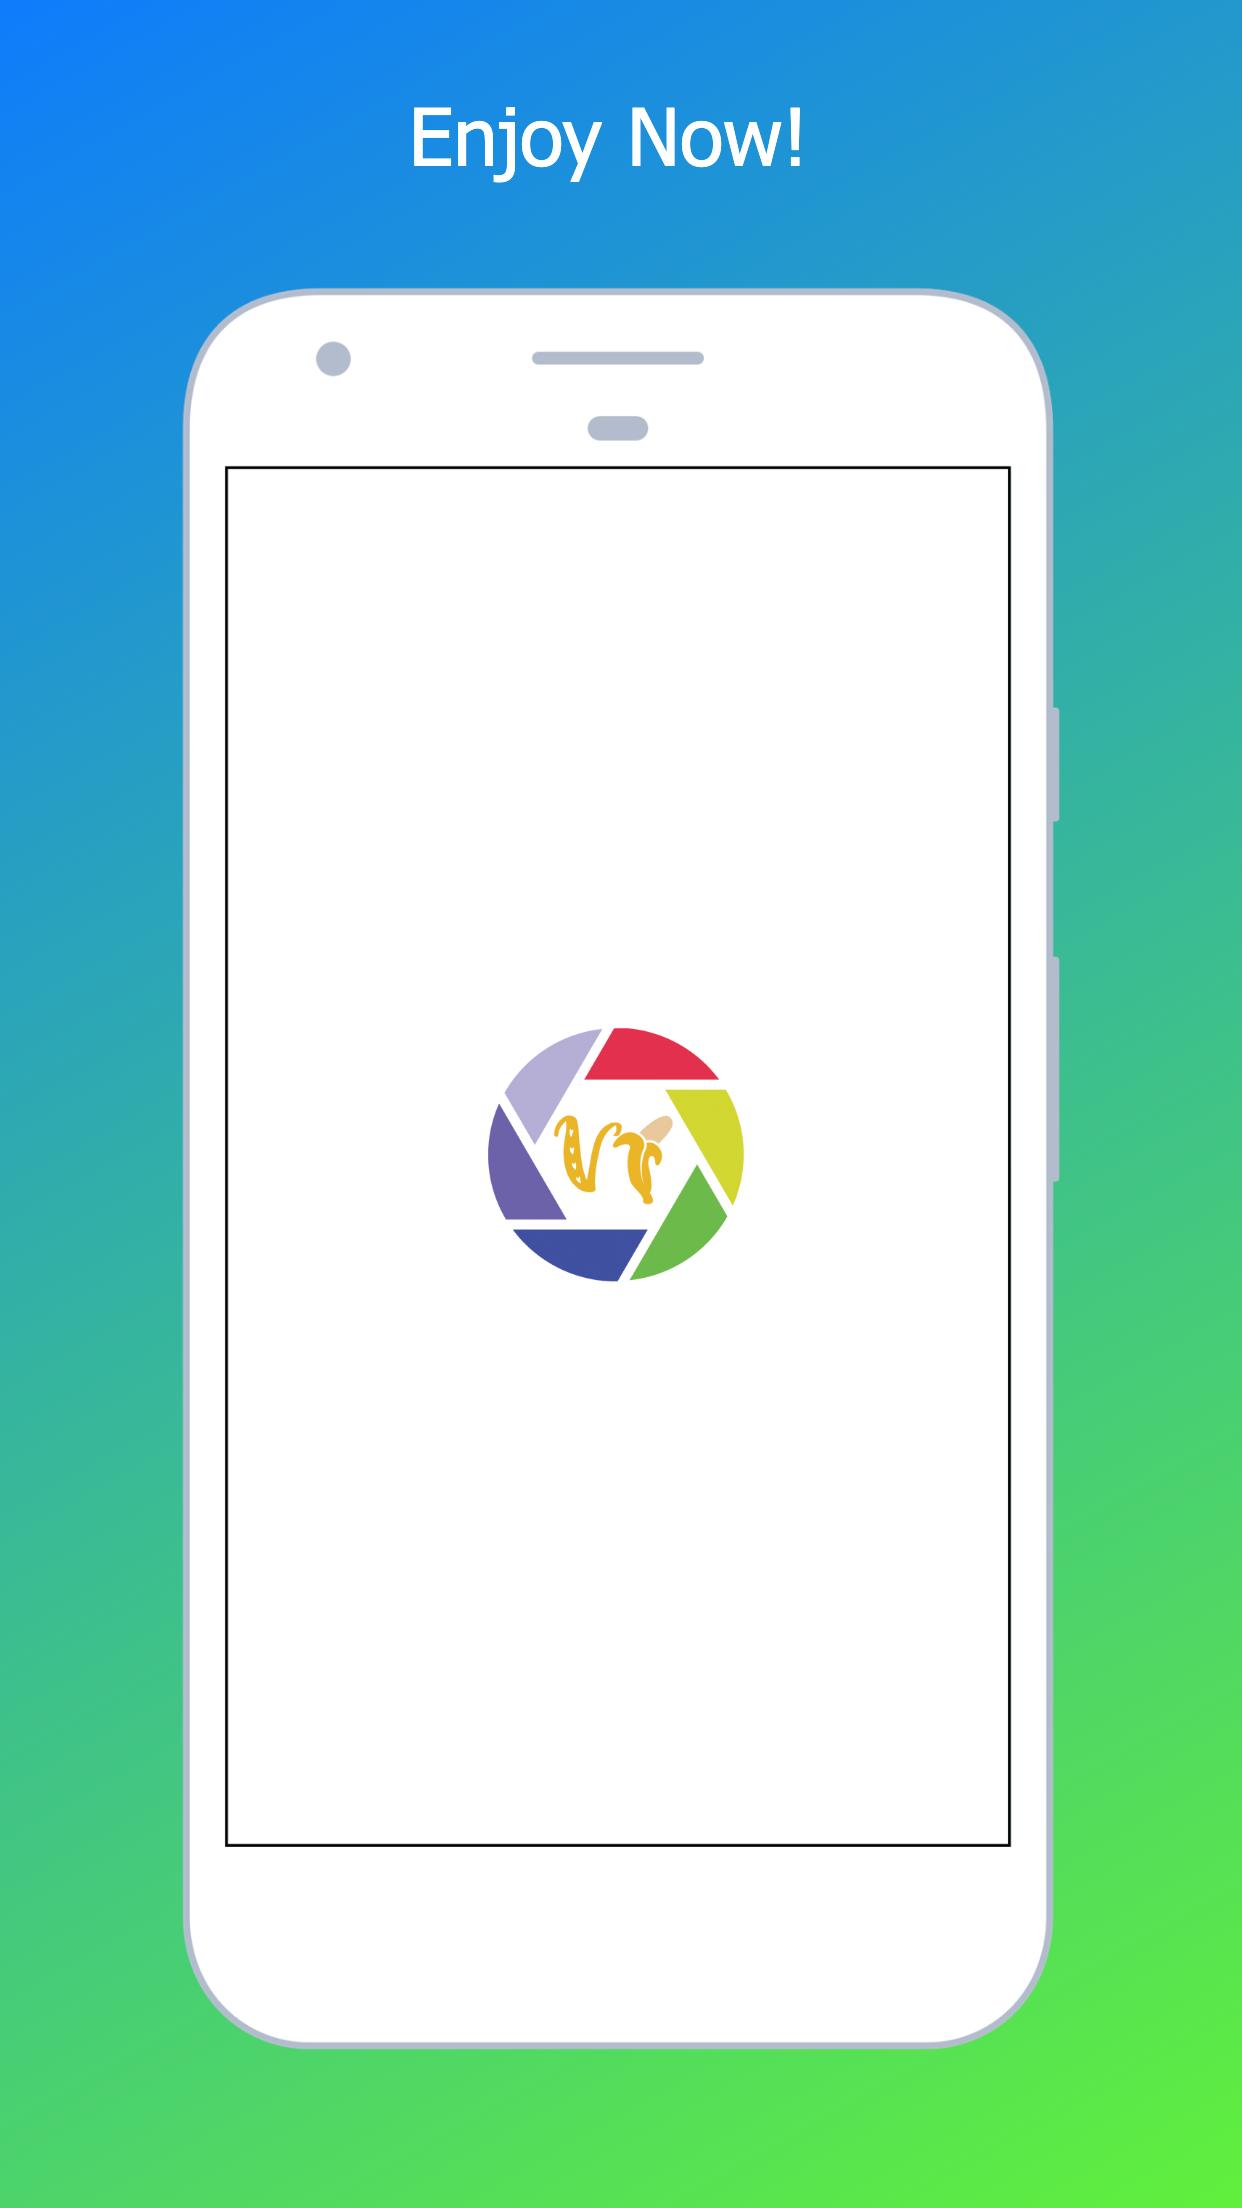 vichat - gay video chat app 2.7 Screenshot 5